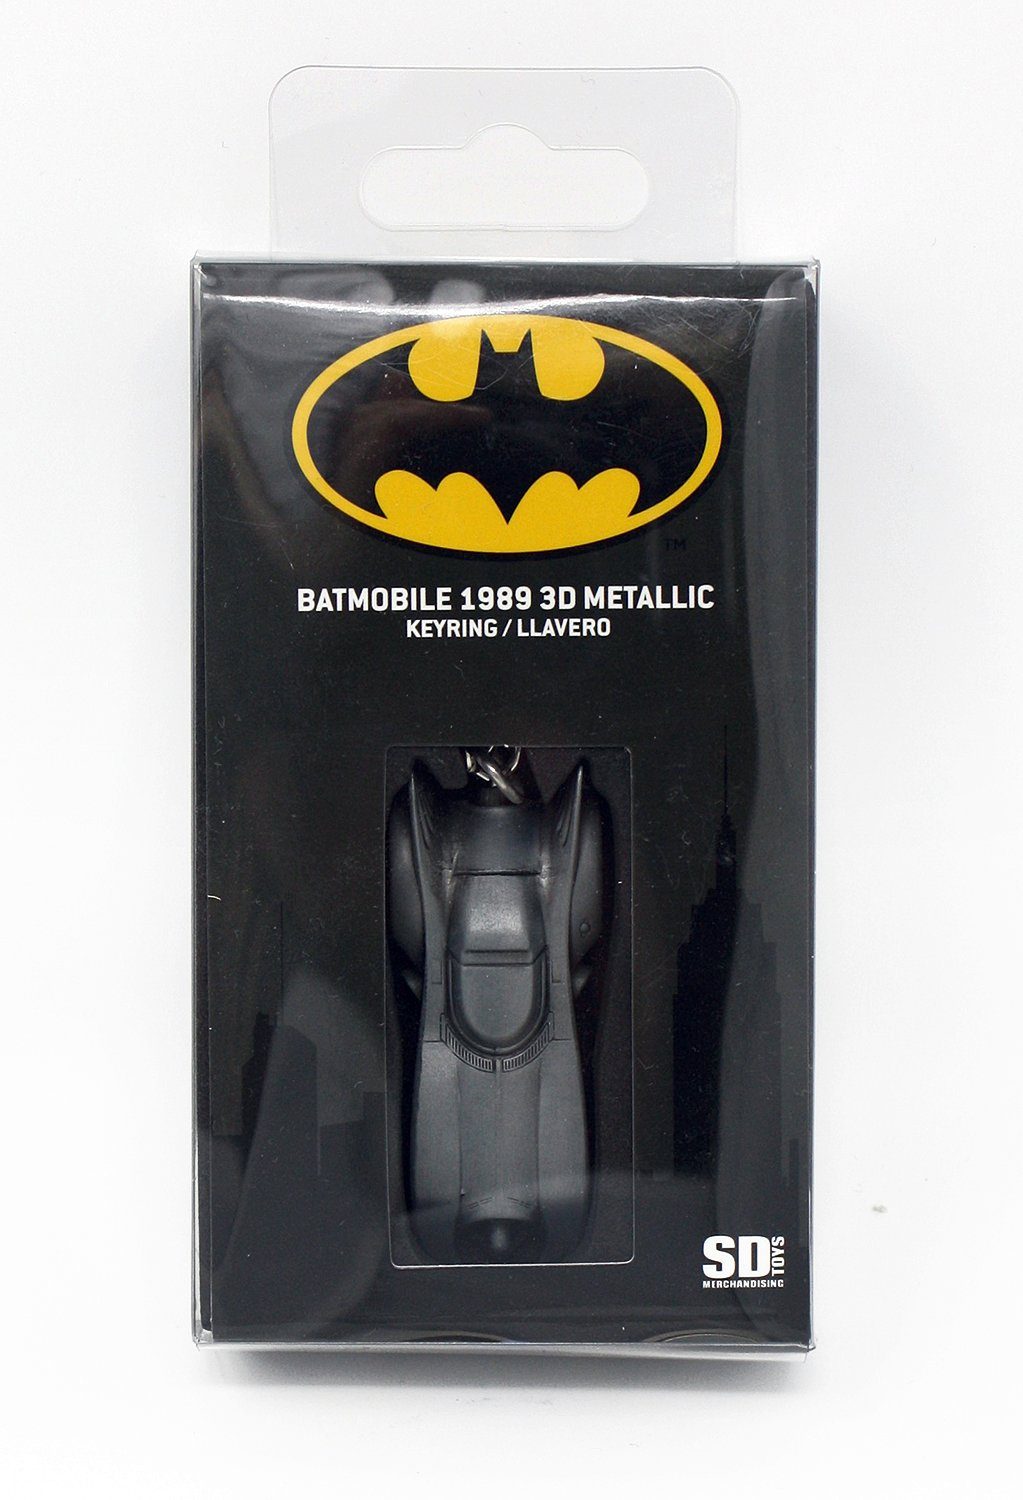 1989 SD Schlüsselanhänger Batman Toys Batmobil 3D Schlüsselanhänger